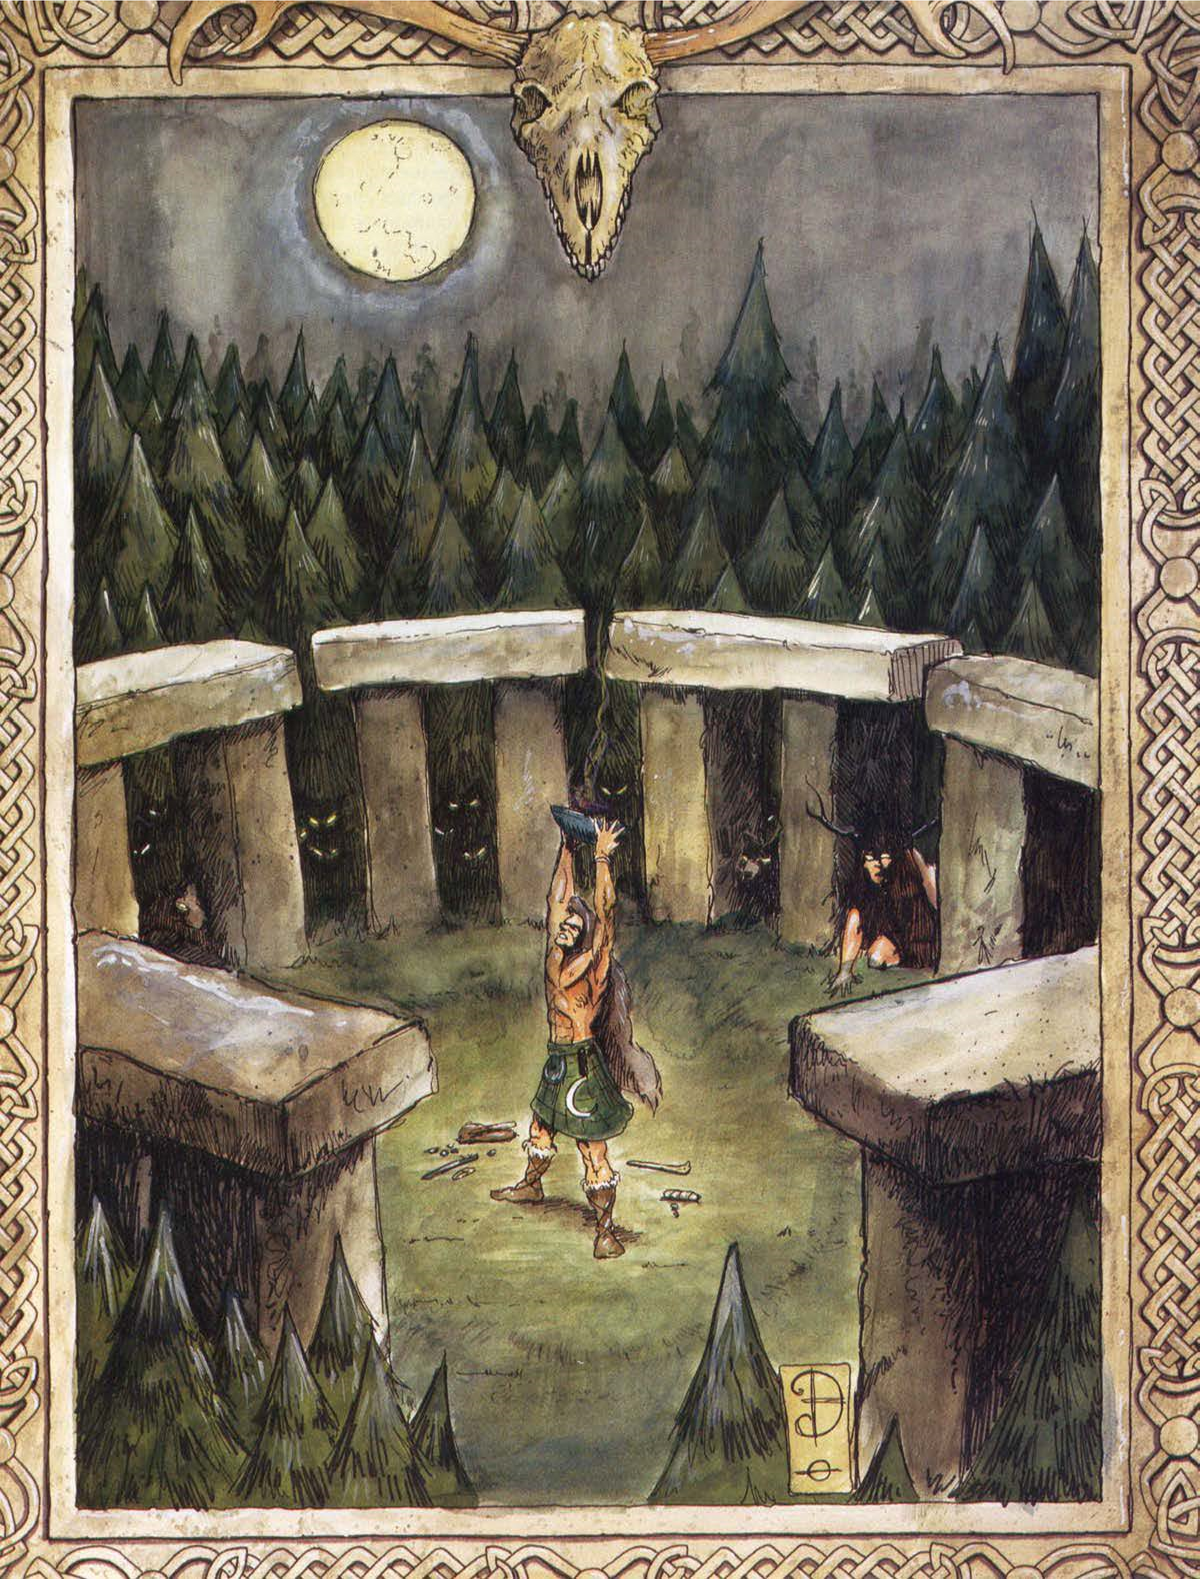 Painted Celtic Warriors (Illustration) - World History Encyclopedia